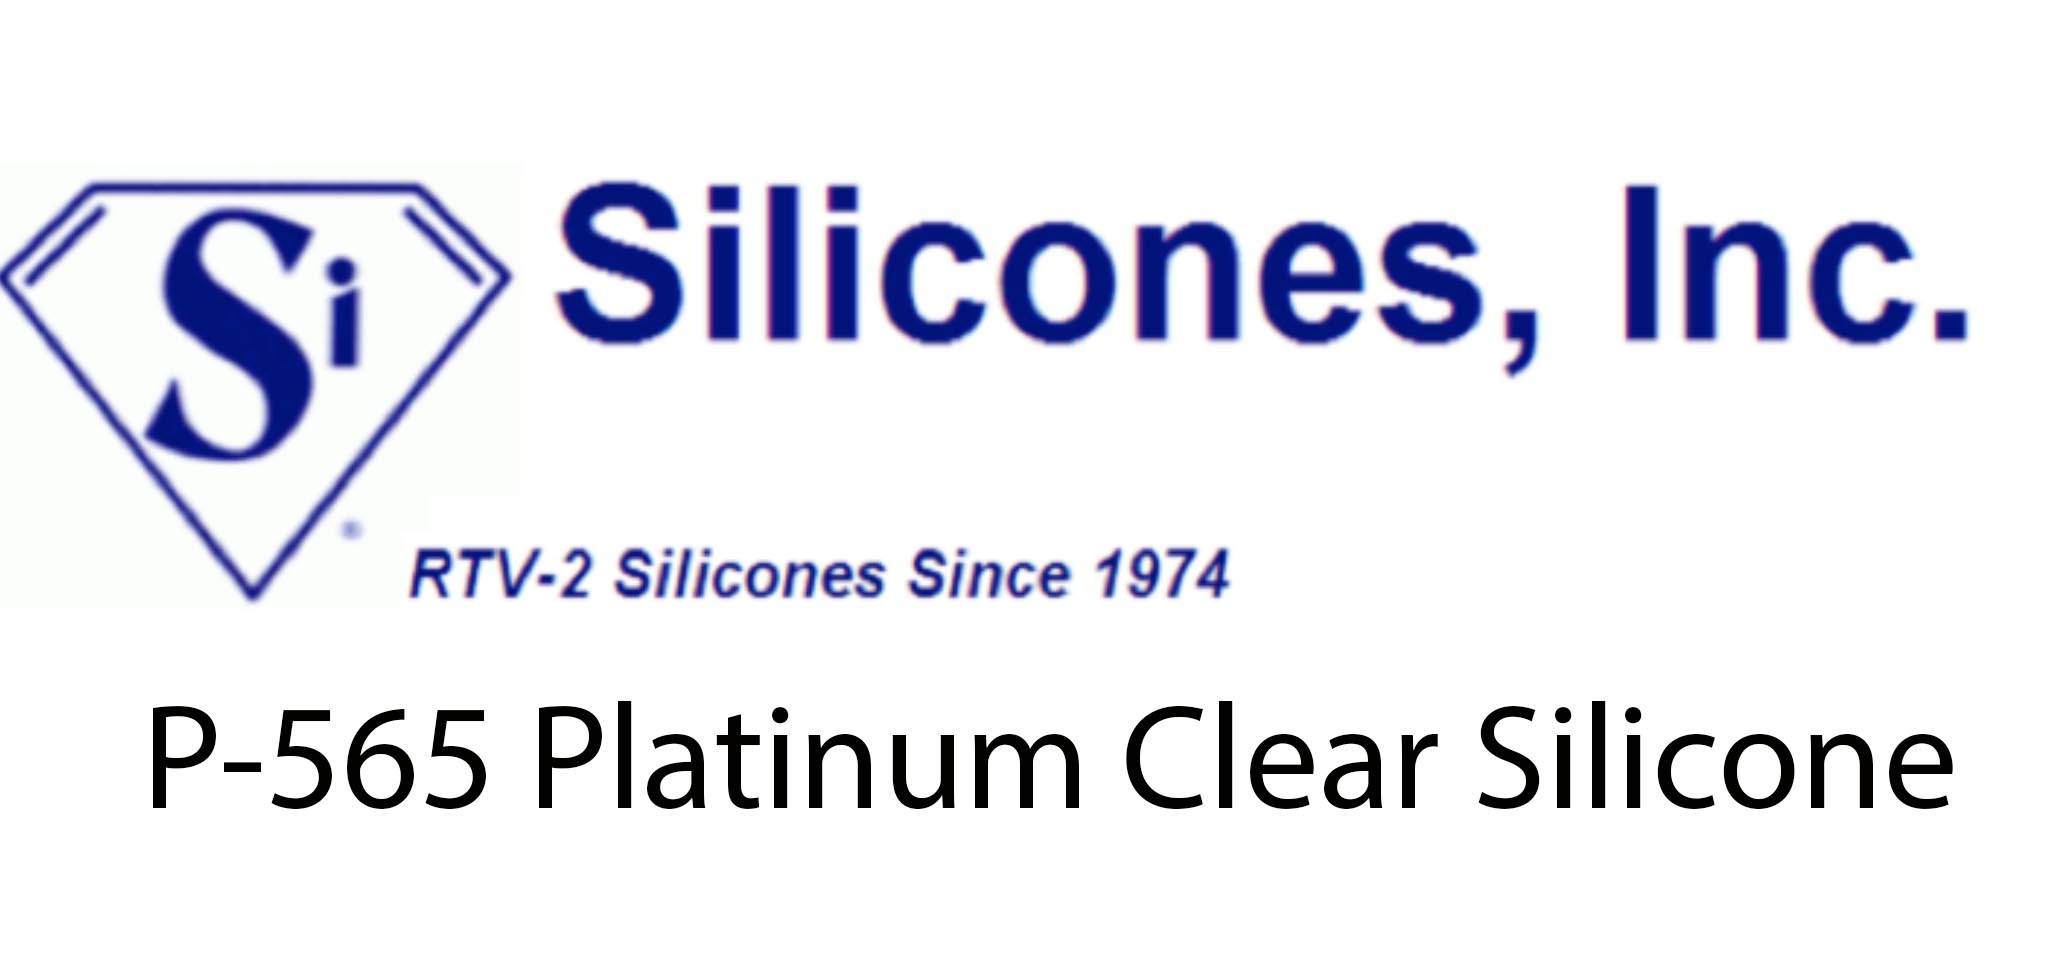 Silicone Inc. P-565 Platinum Clear Silicone